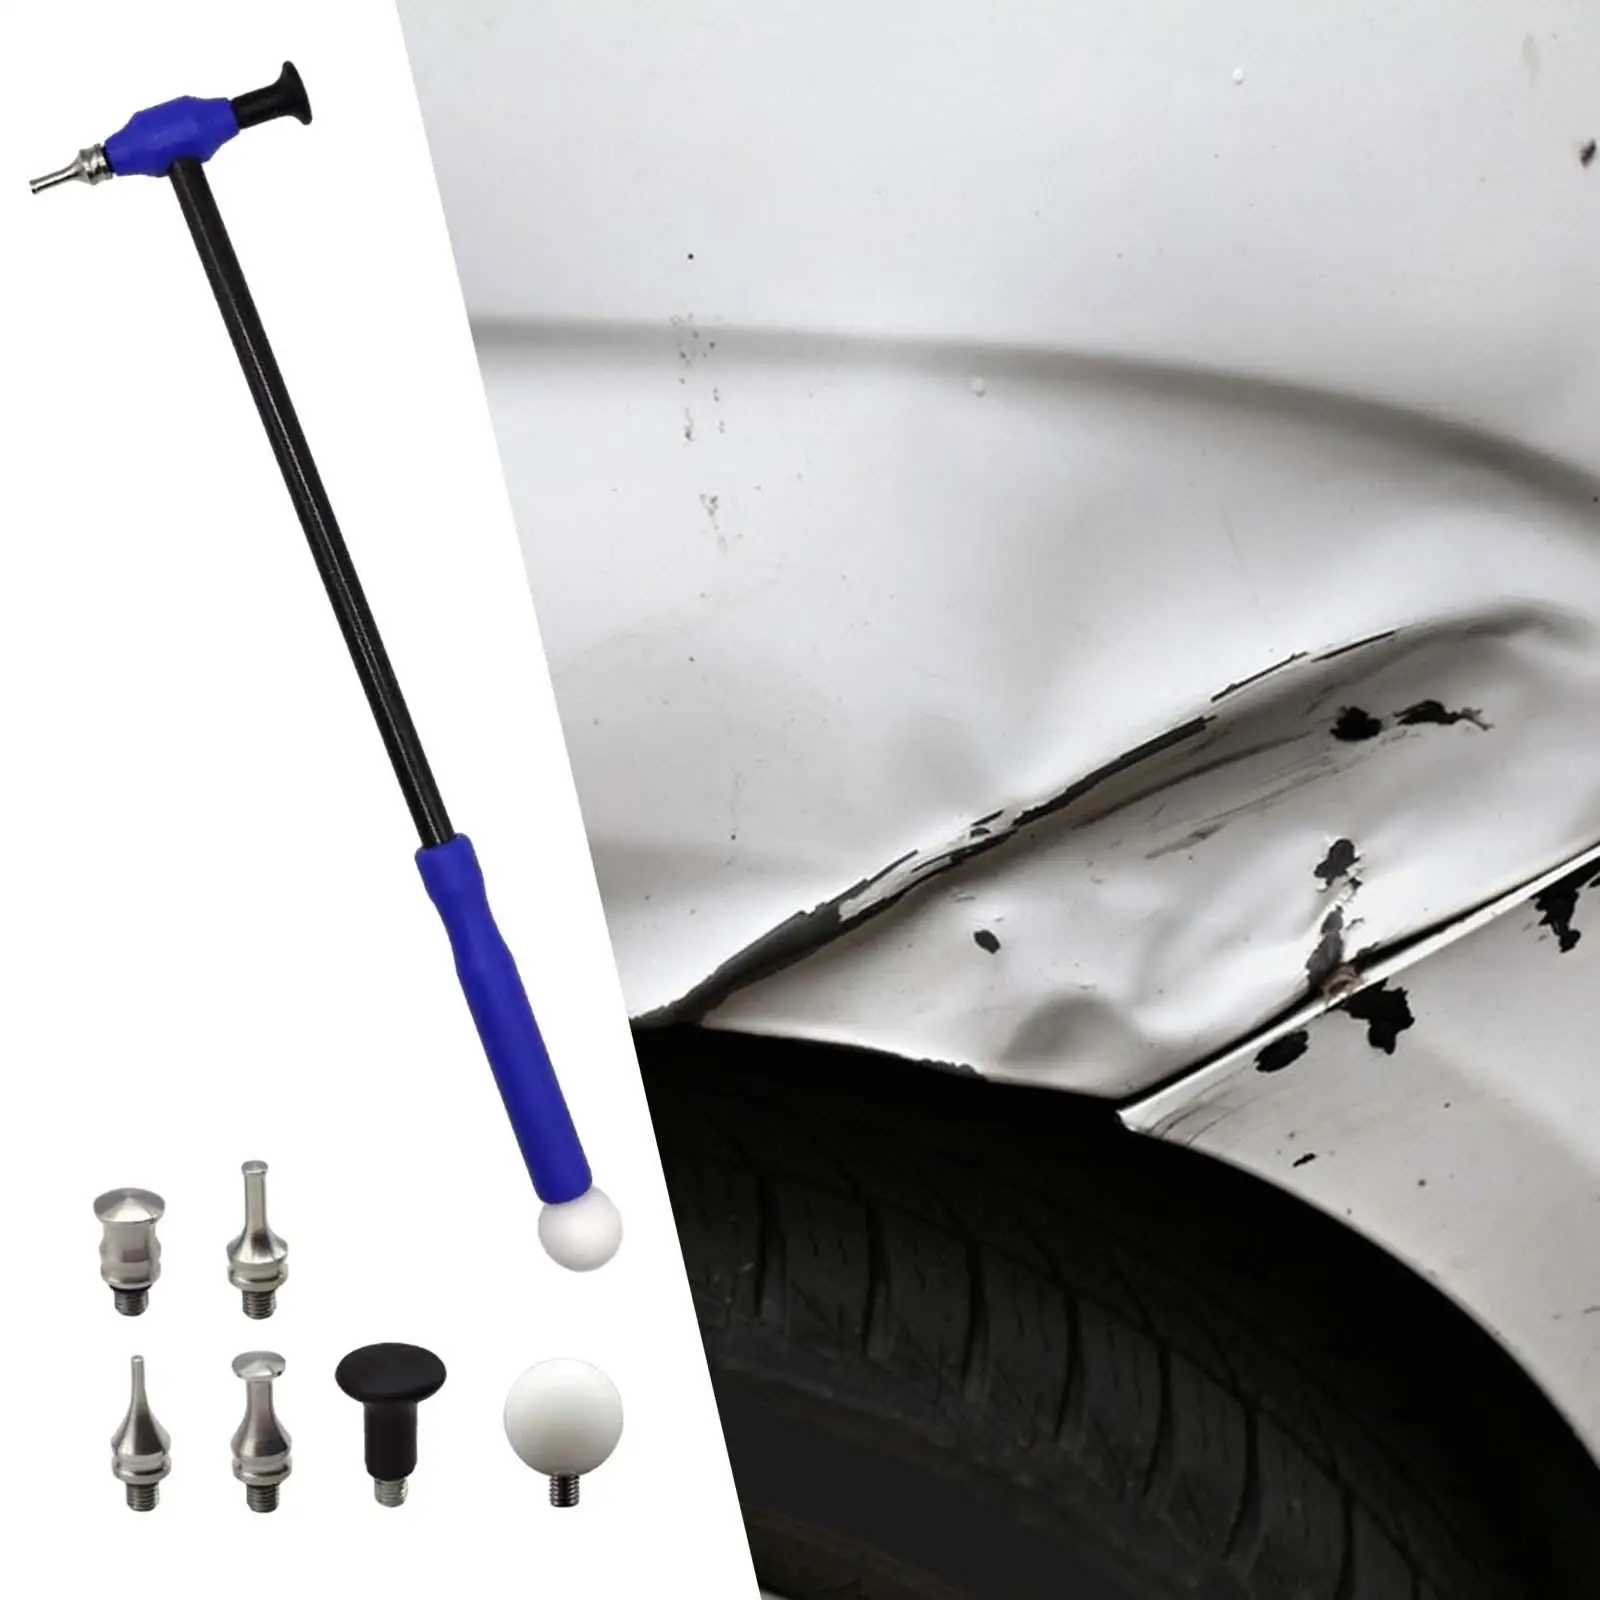 

Car Body Dent Repair Tool, Paintless Dent Repair Set Durable Portable Dent Hammer, Car Dent Remover for Truck Refrigerator